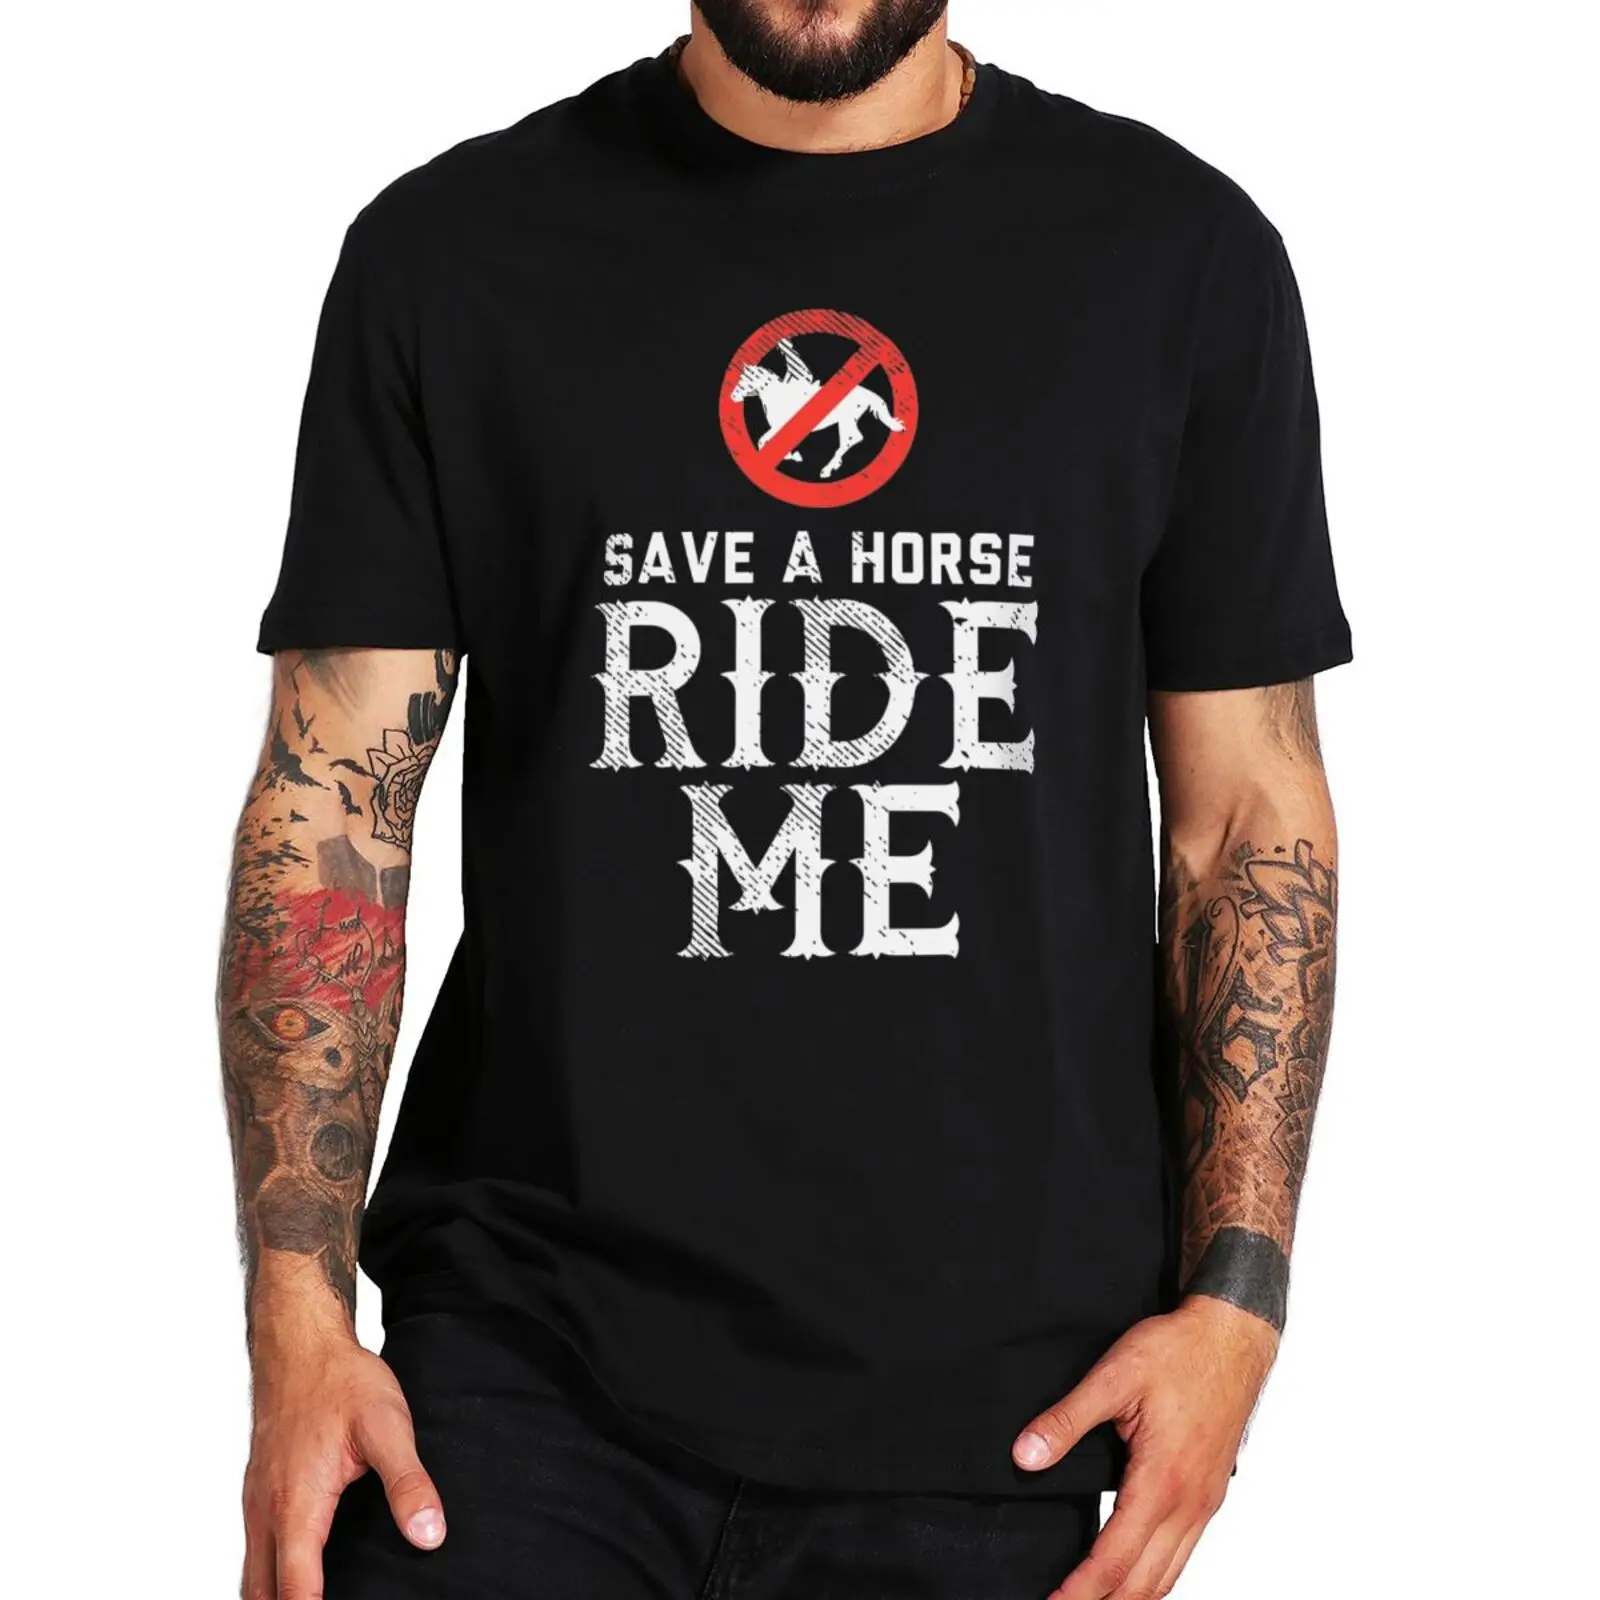 

Save A Horse Ride Me T Shirt Funny Slang Puns Adult Jokes Gift Men Clothing 100% Cotton O-neck Soft Summer Tee Tops EU Size